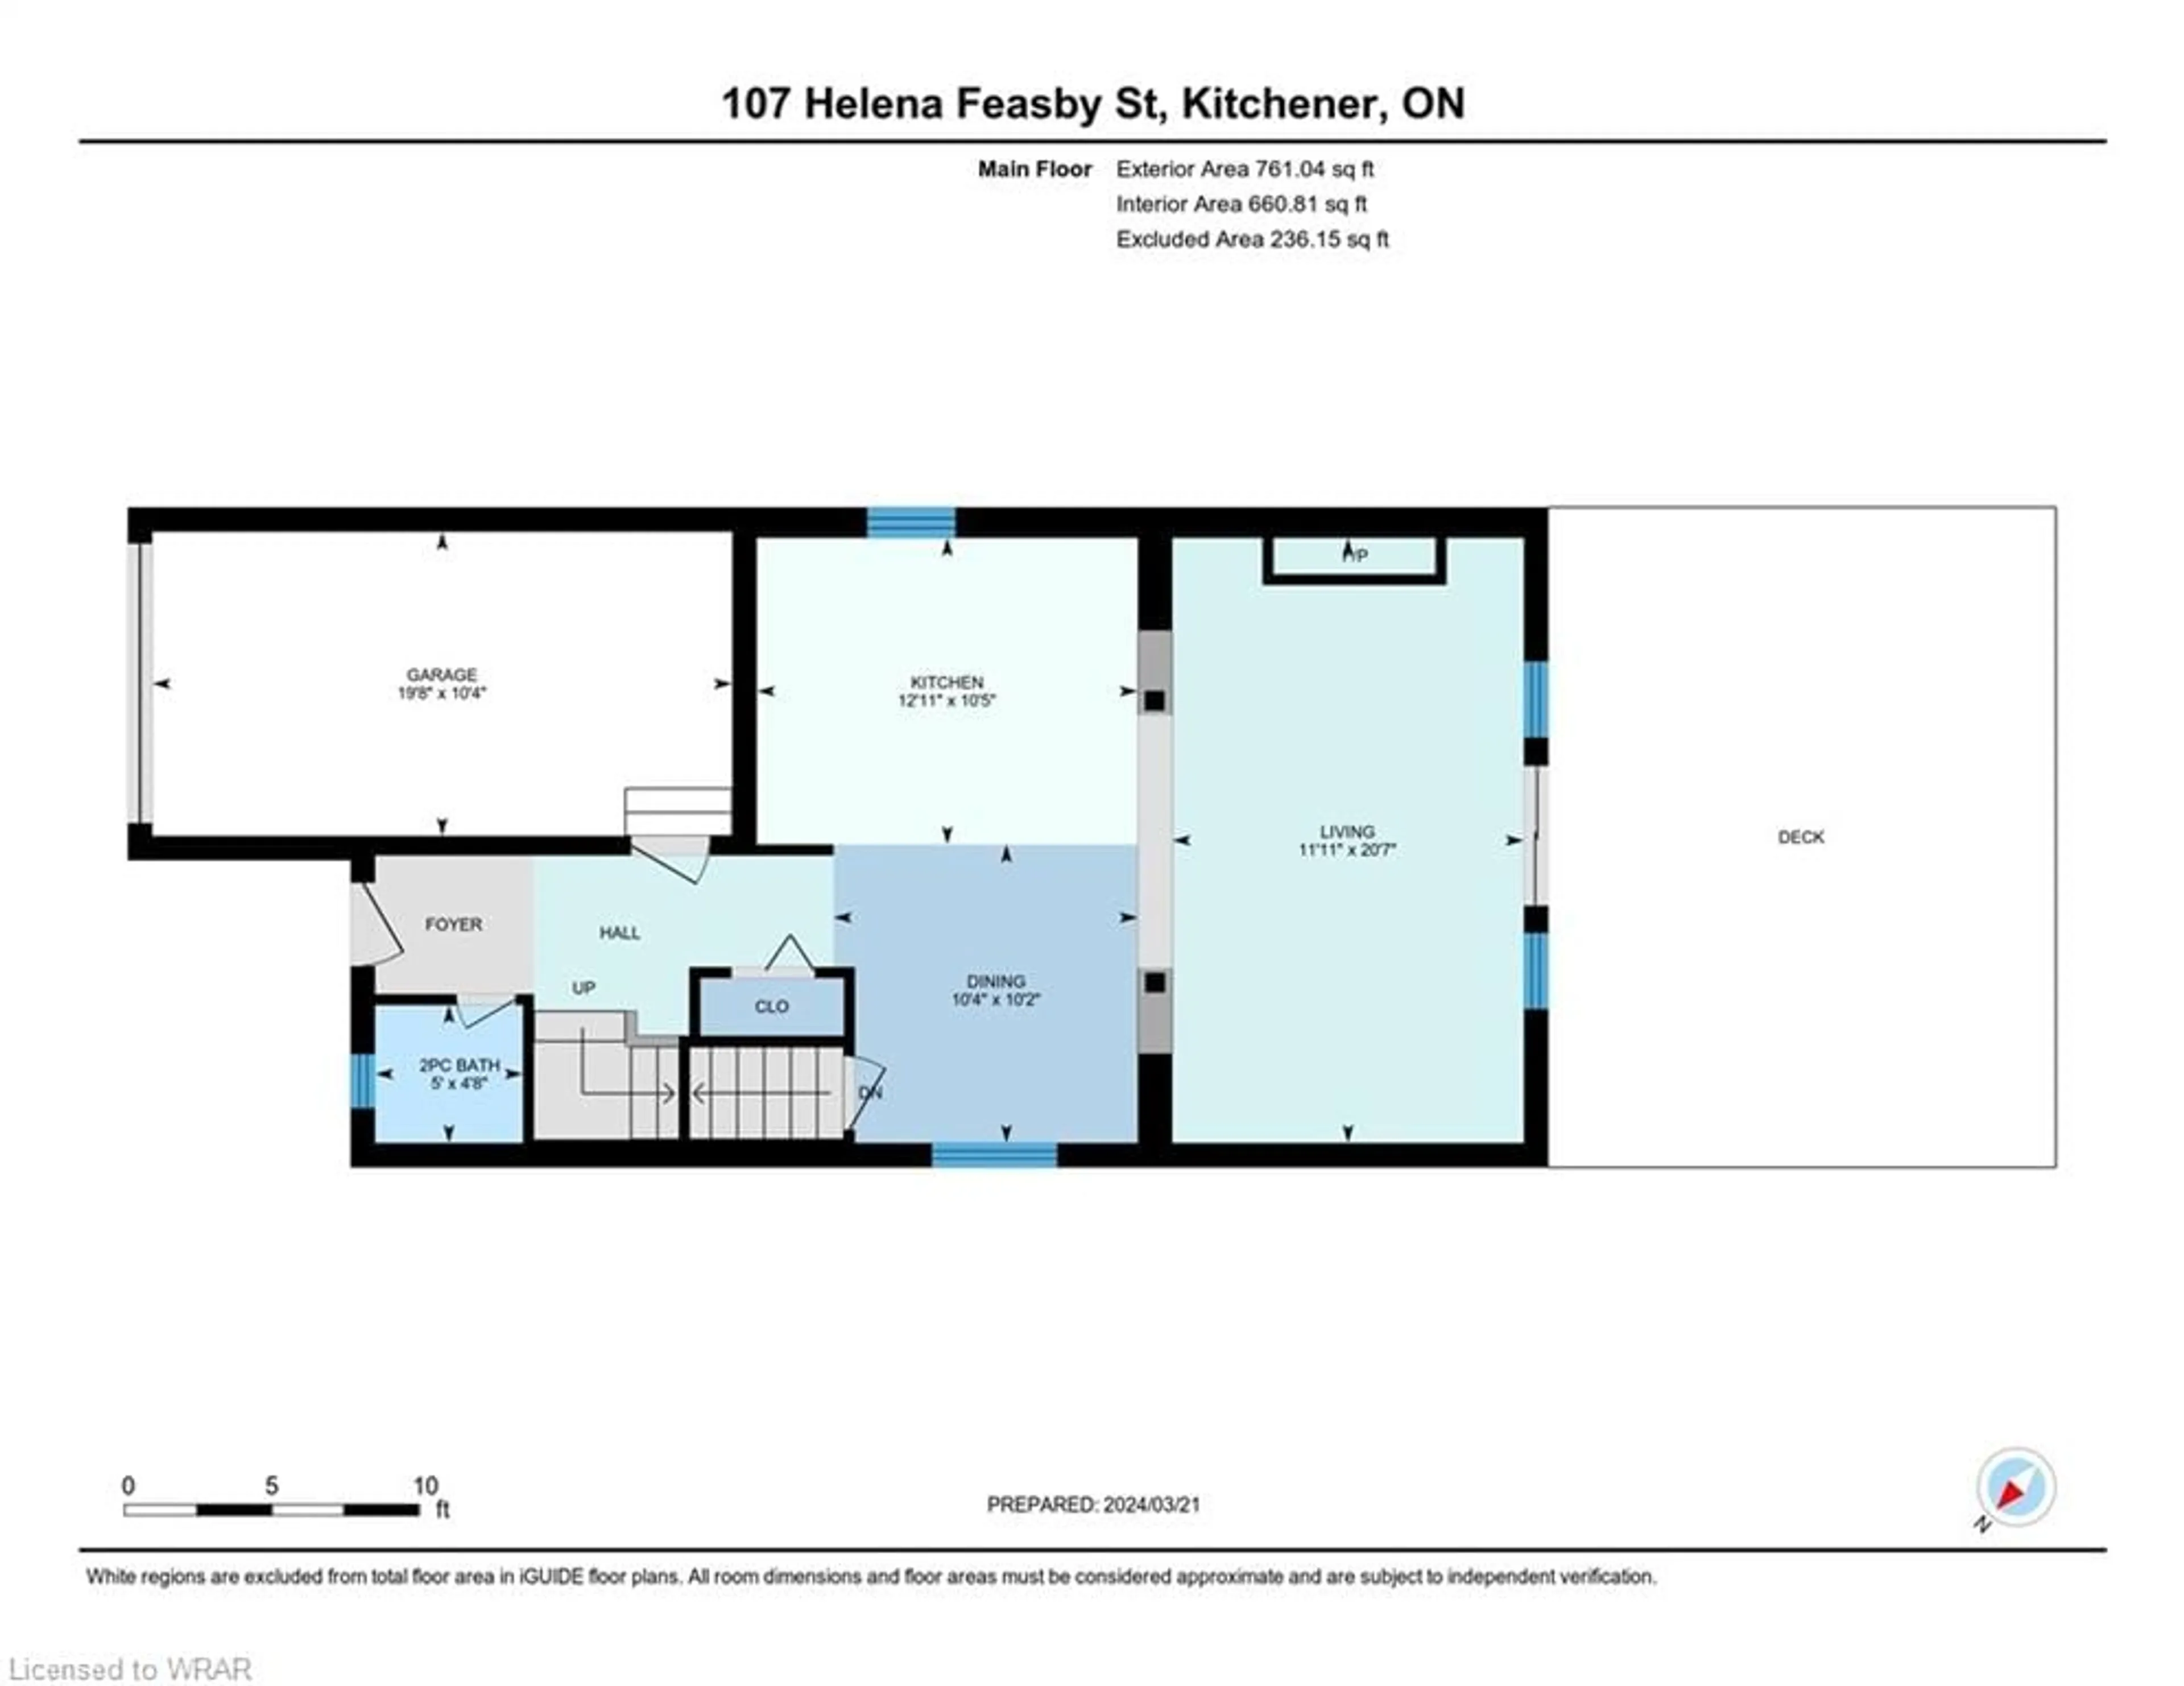 Floor plan for 107 Helena Feasby St, Kitchener Ontario N2E 4K9